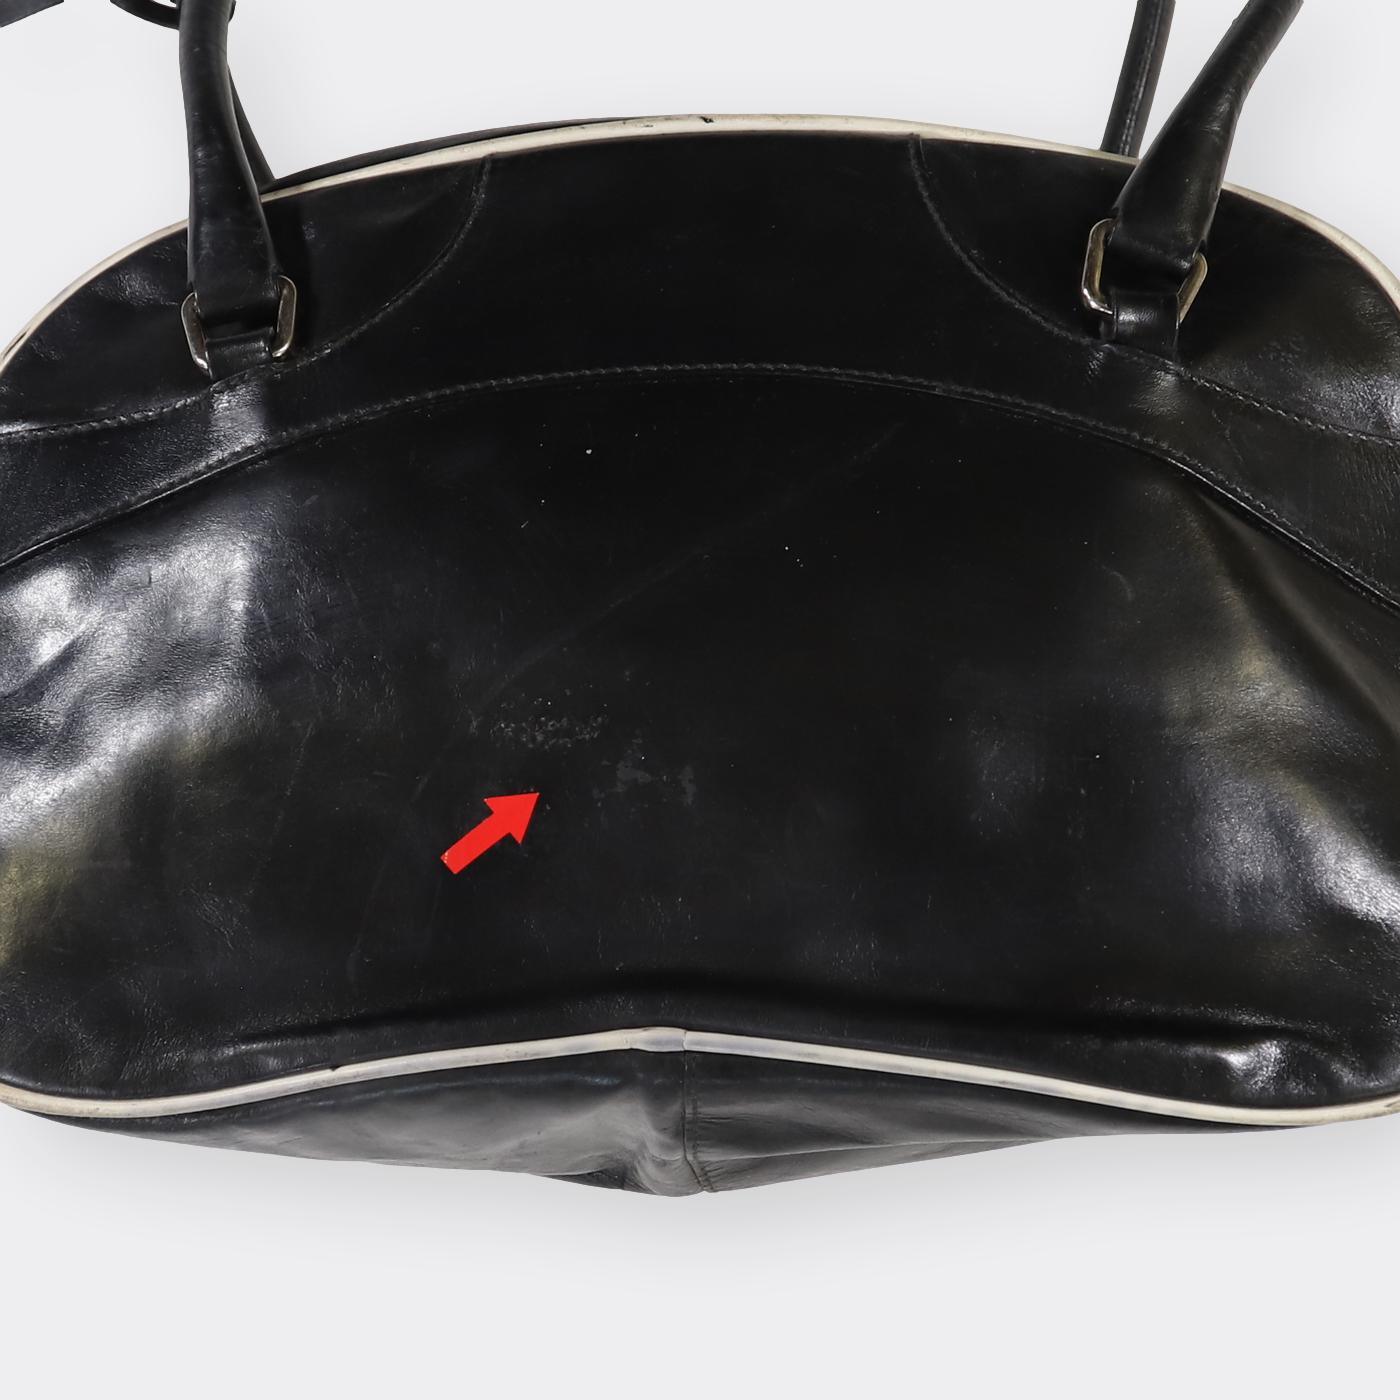 Prada Vintage Handbag - Known Source